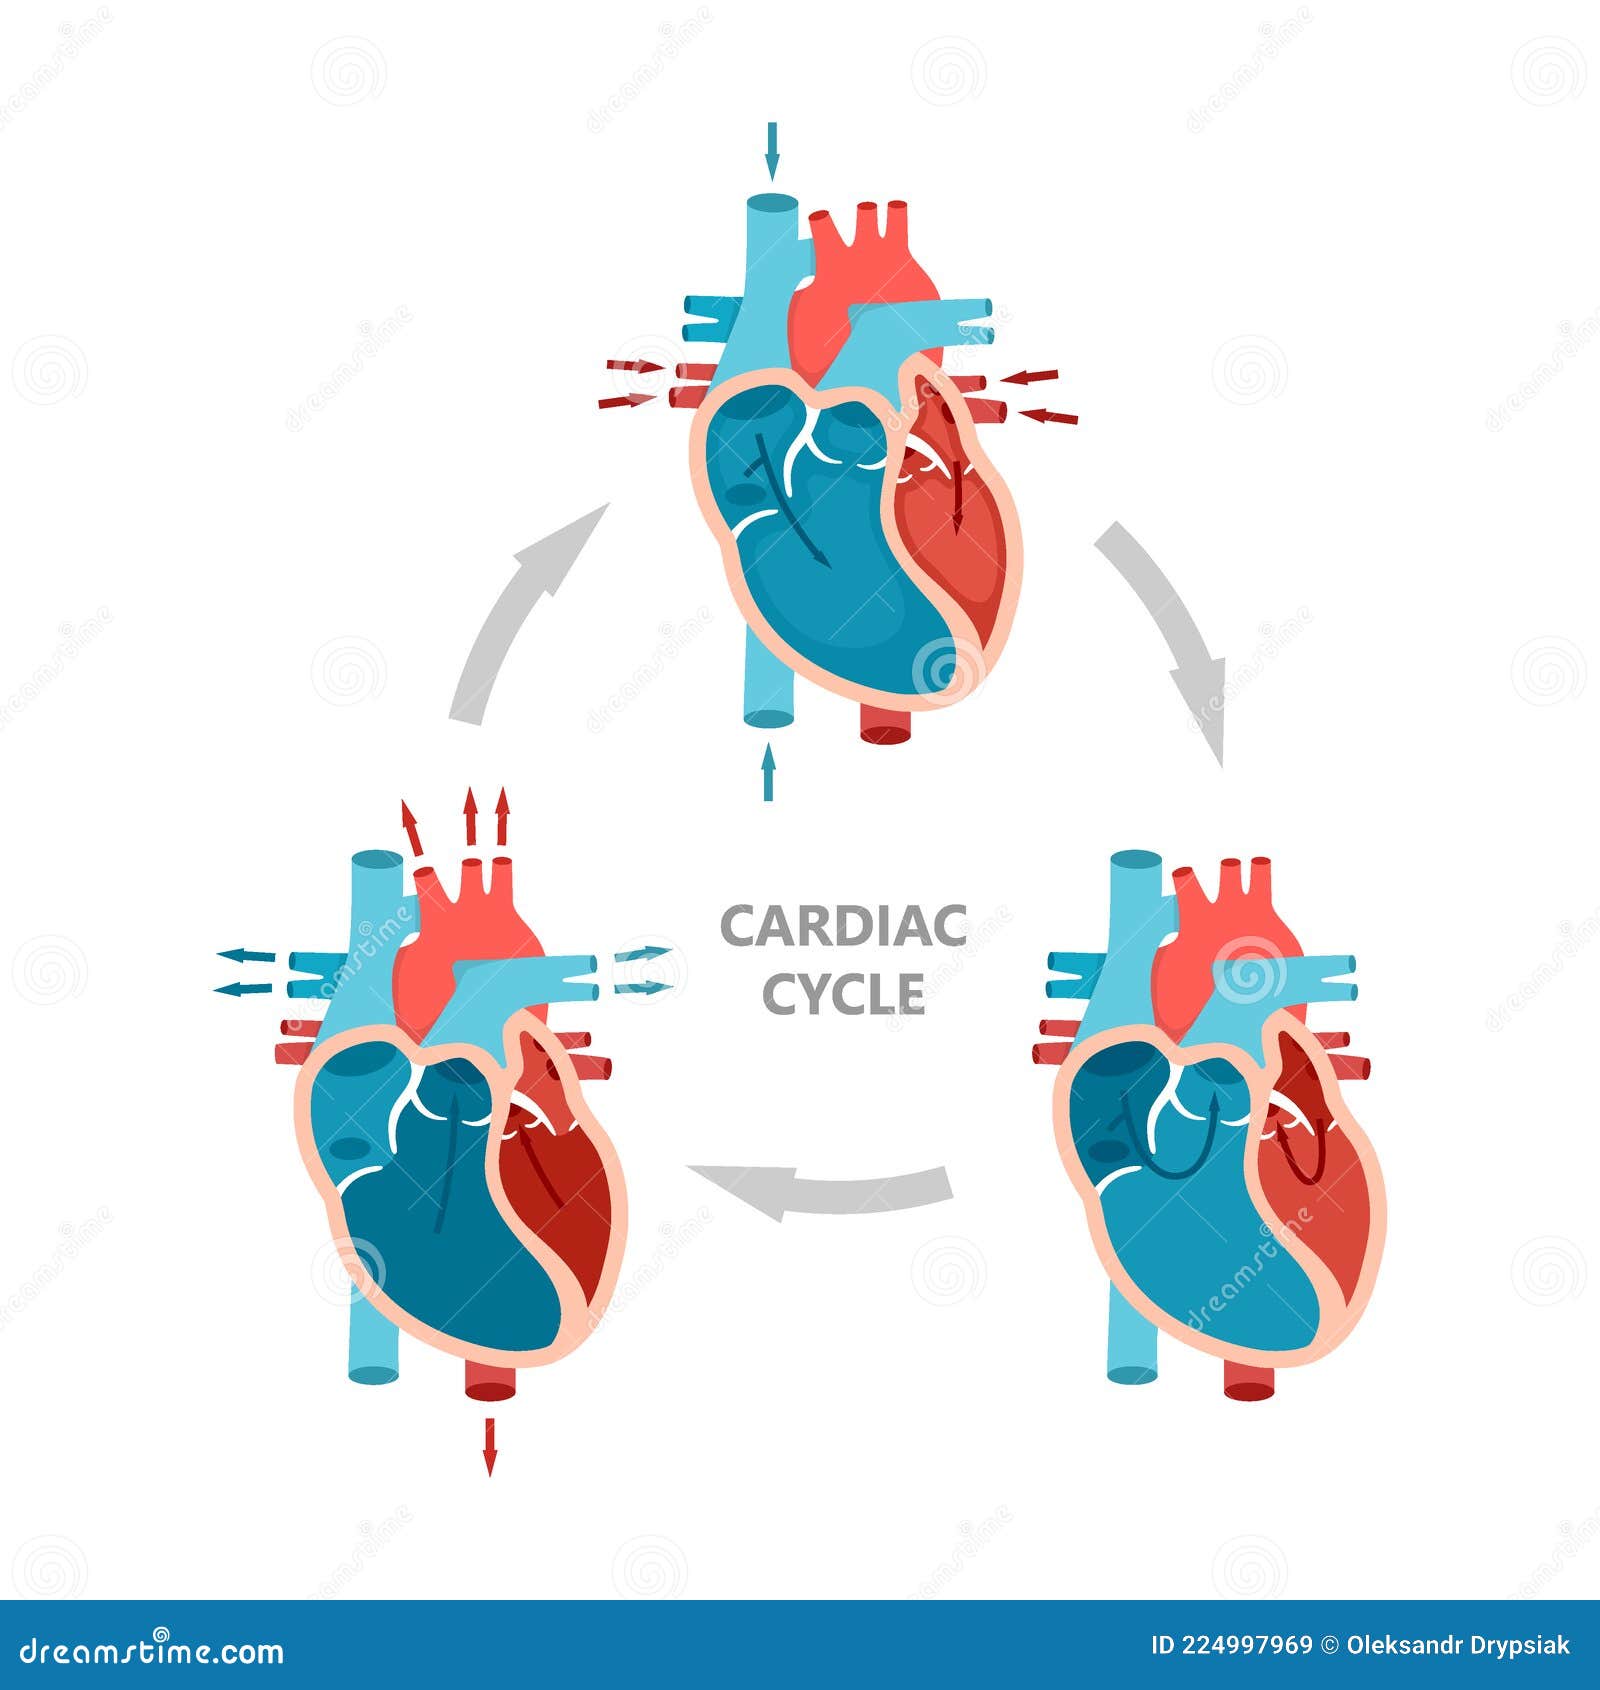 cardiac cycle of heart)